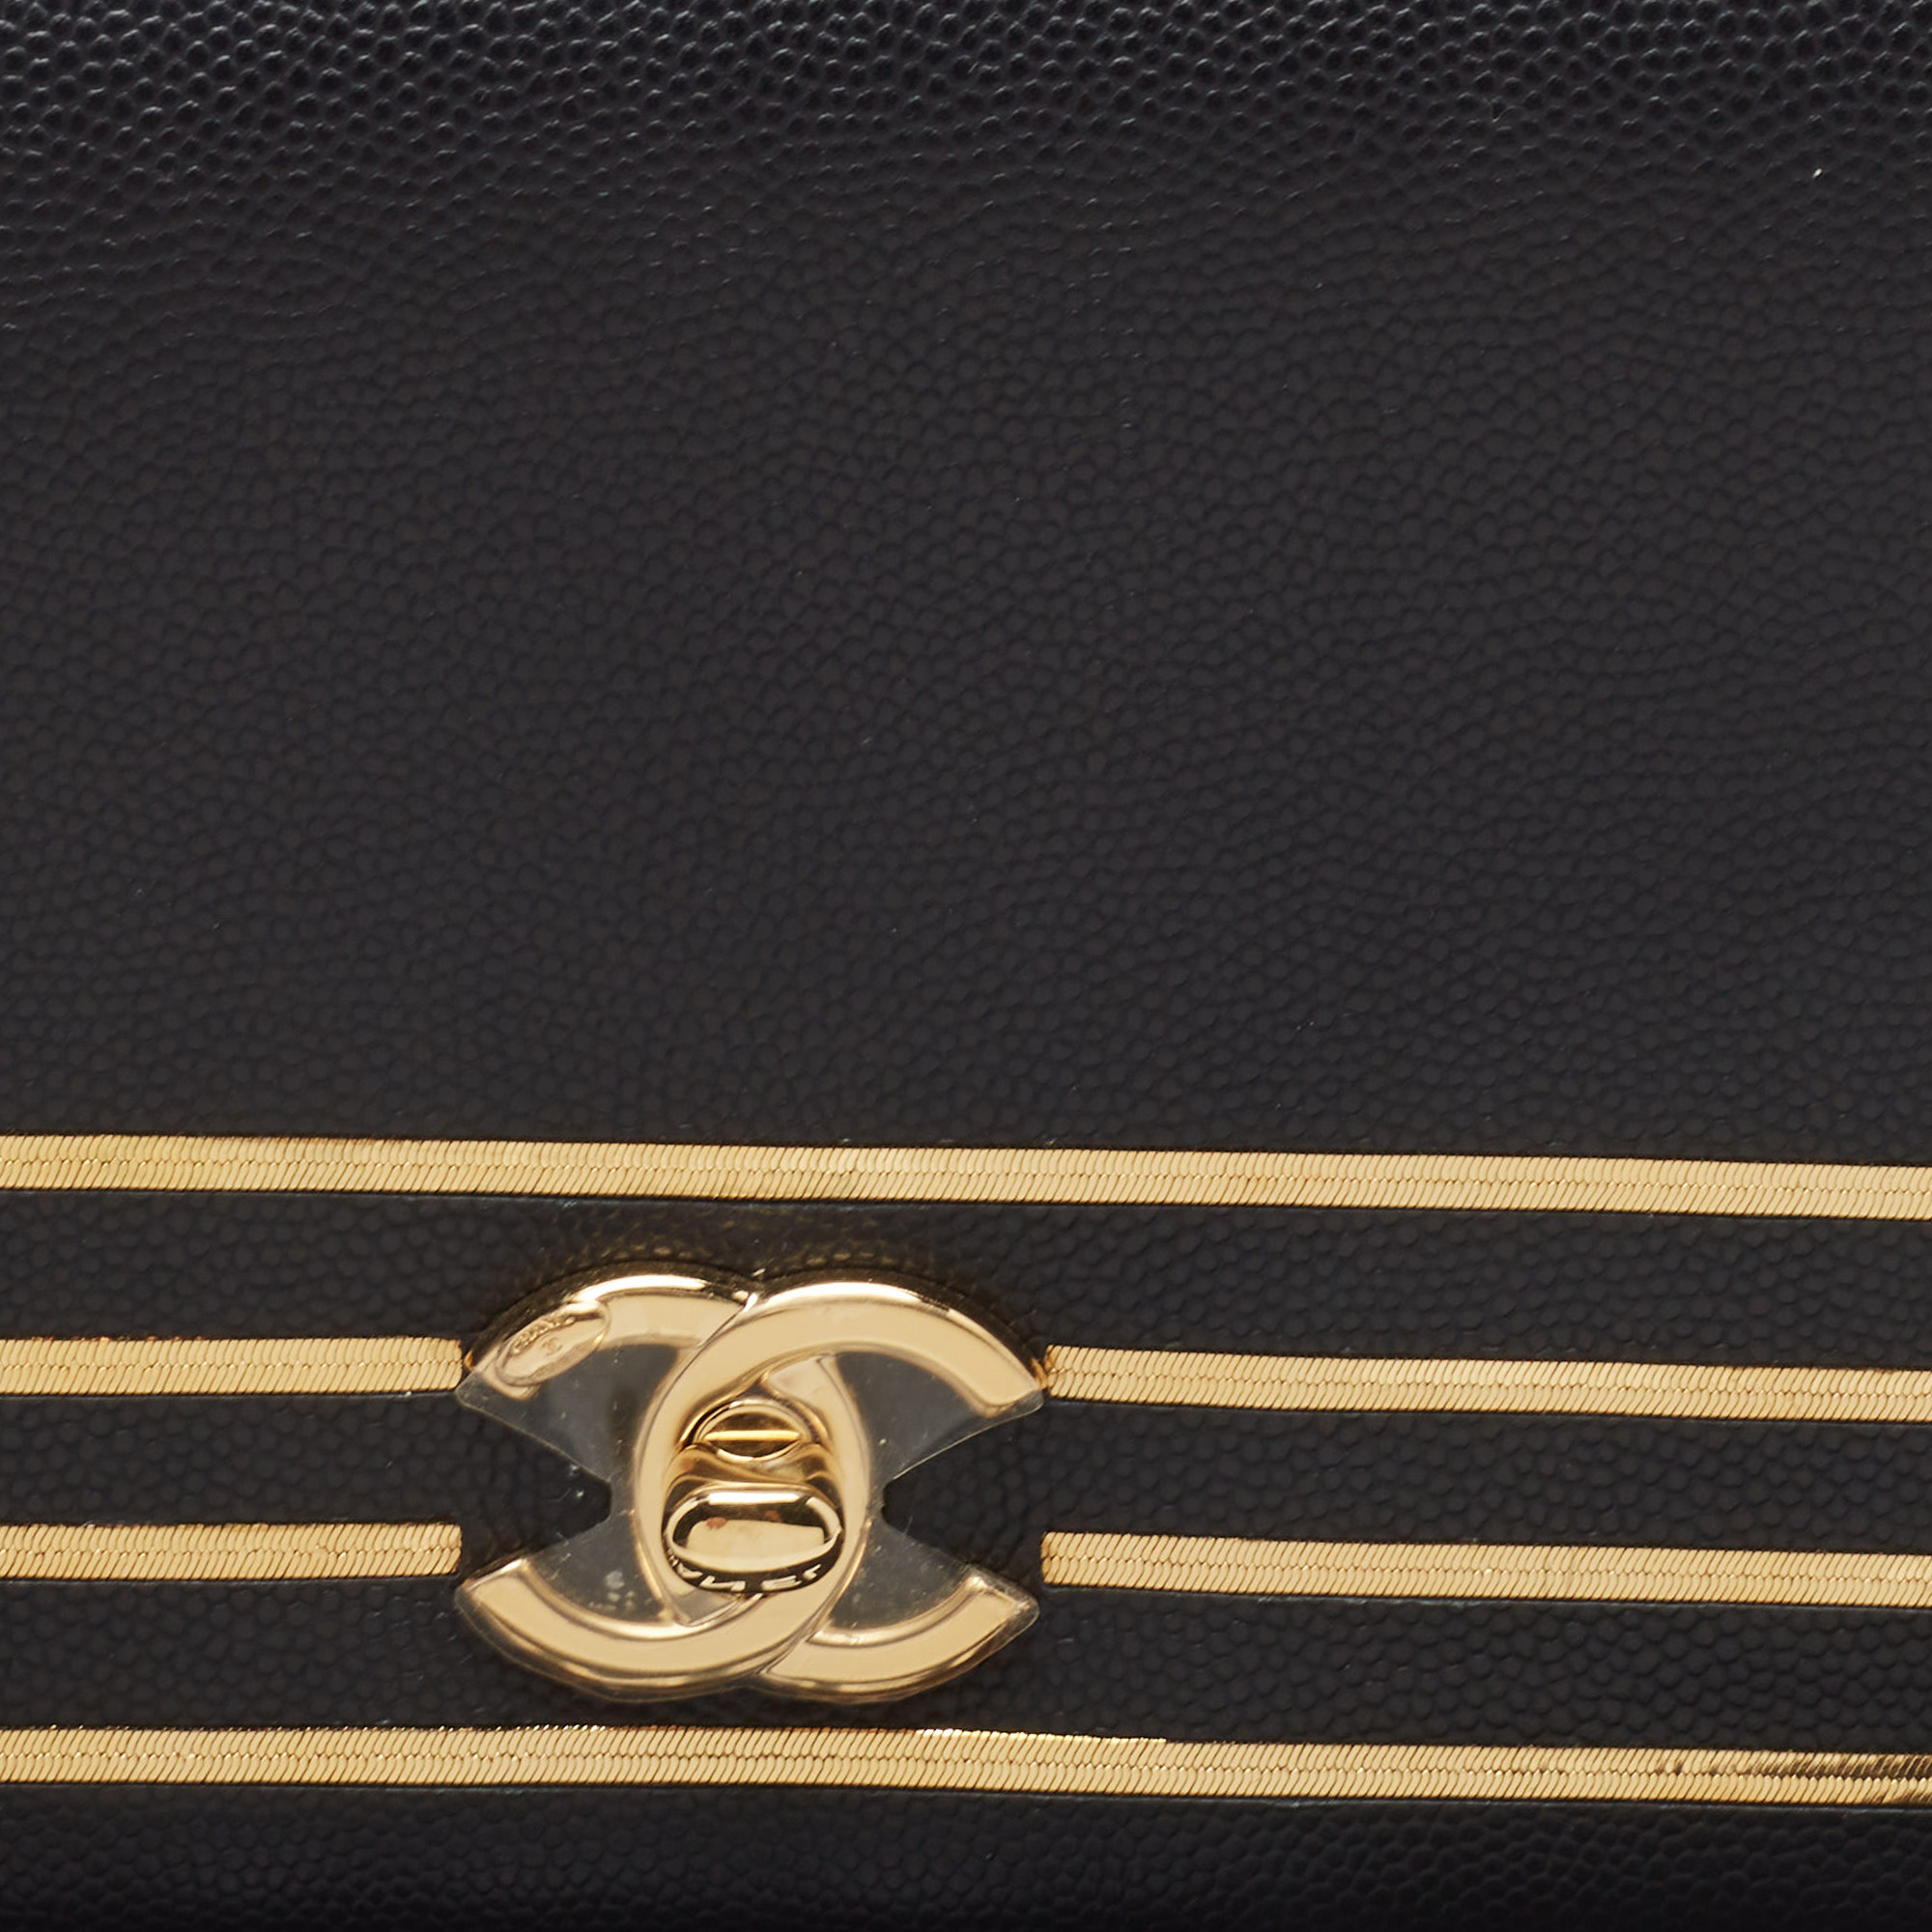 Chanel Black Caviar Leather Captain Gold Waist Bag